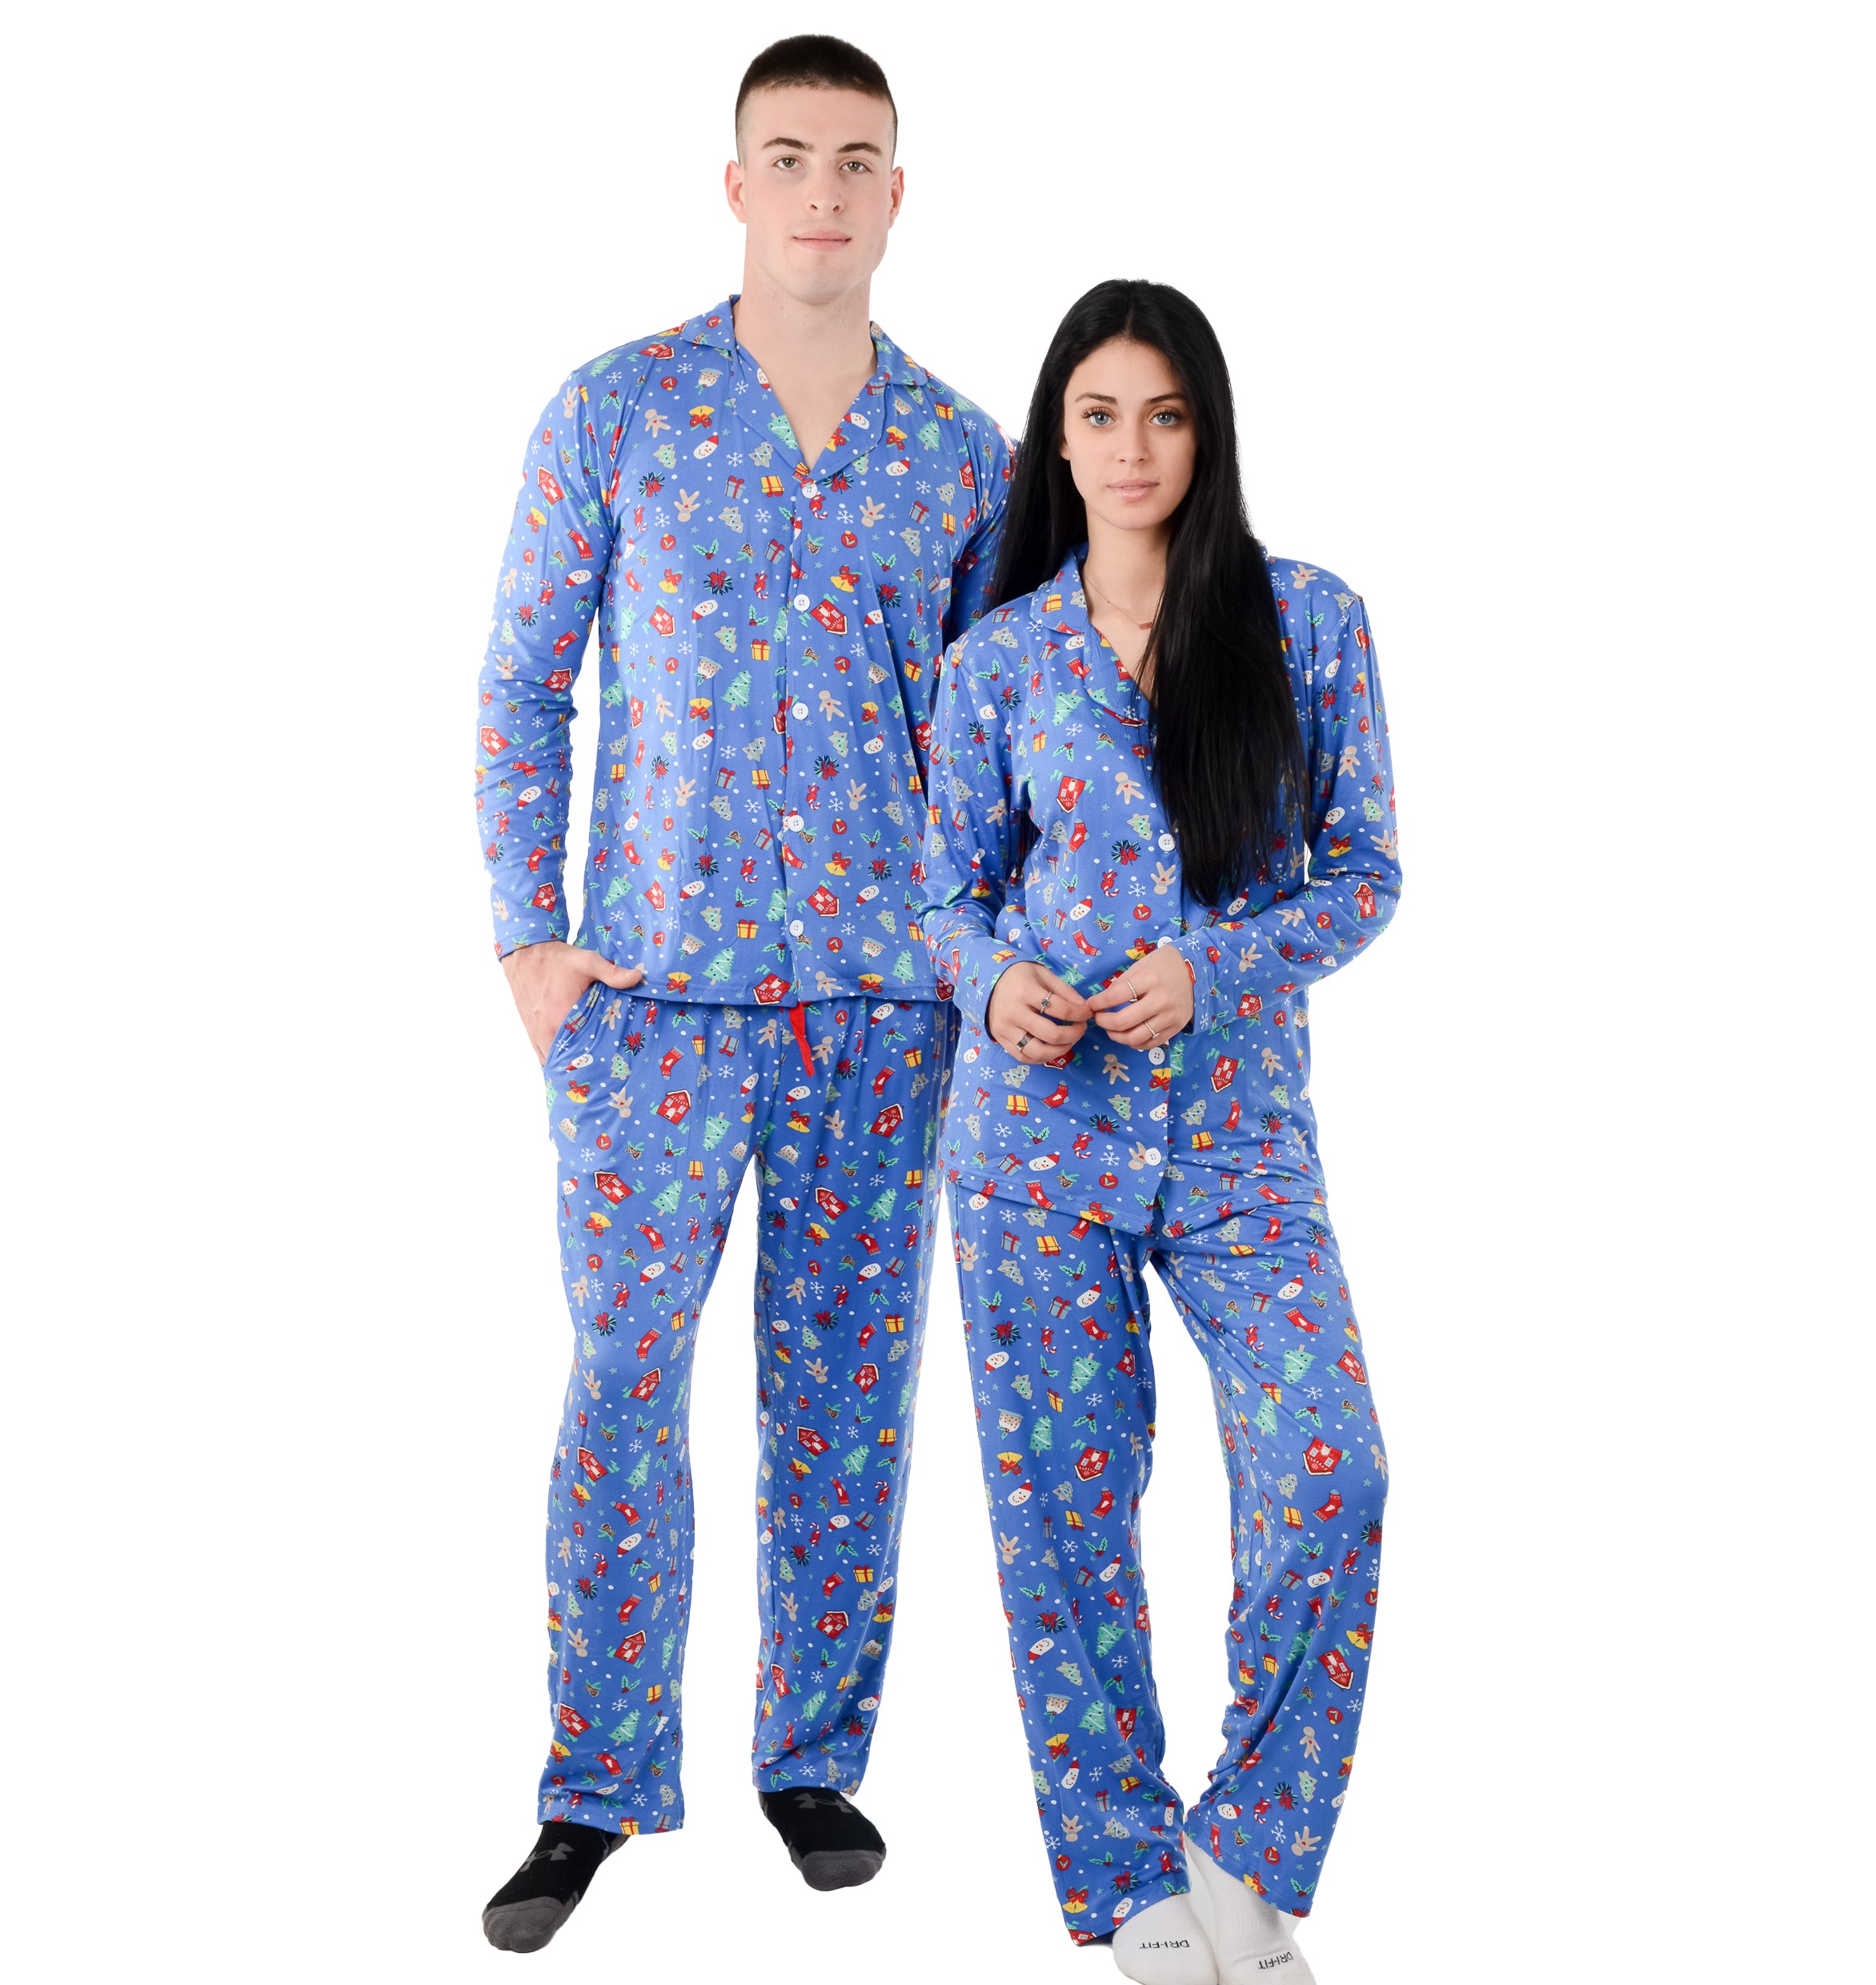  Christmas Pajama Set Womens Long Sleeve Sleep Set Matching  Family Holiday Lounge Sets Navy Blue 2XL